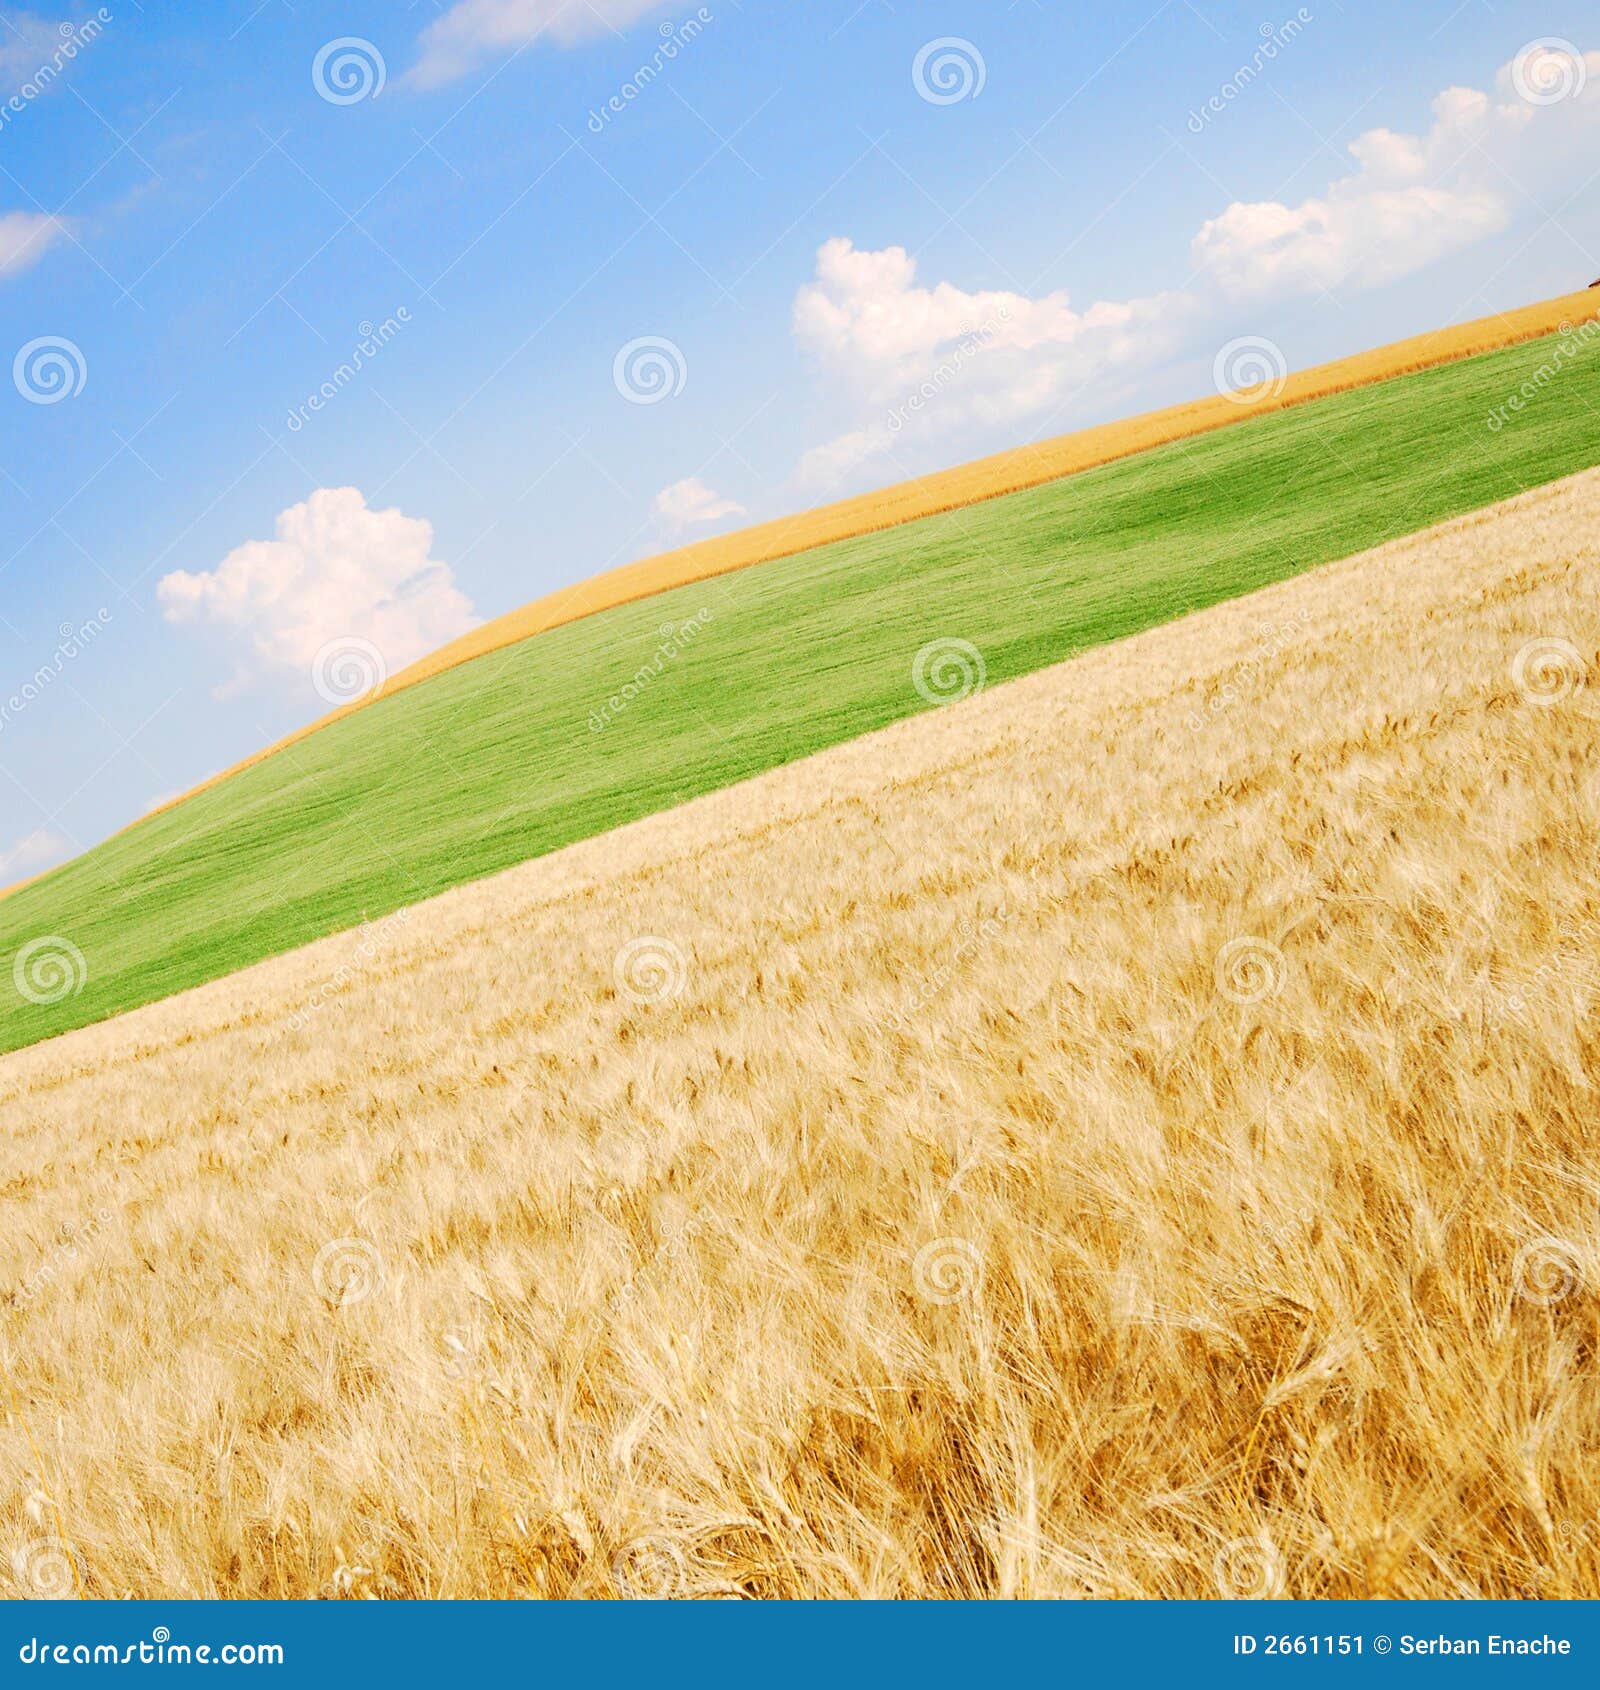 wheat field angled